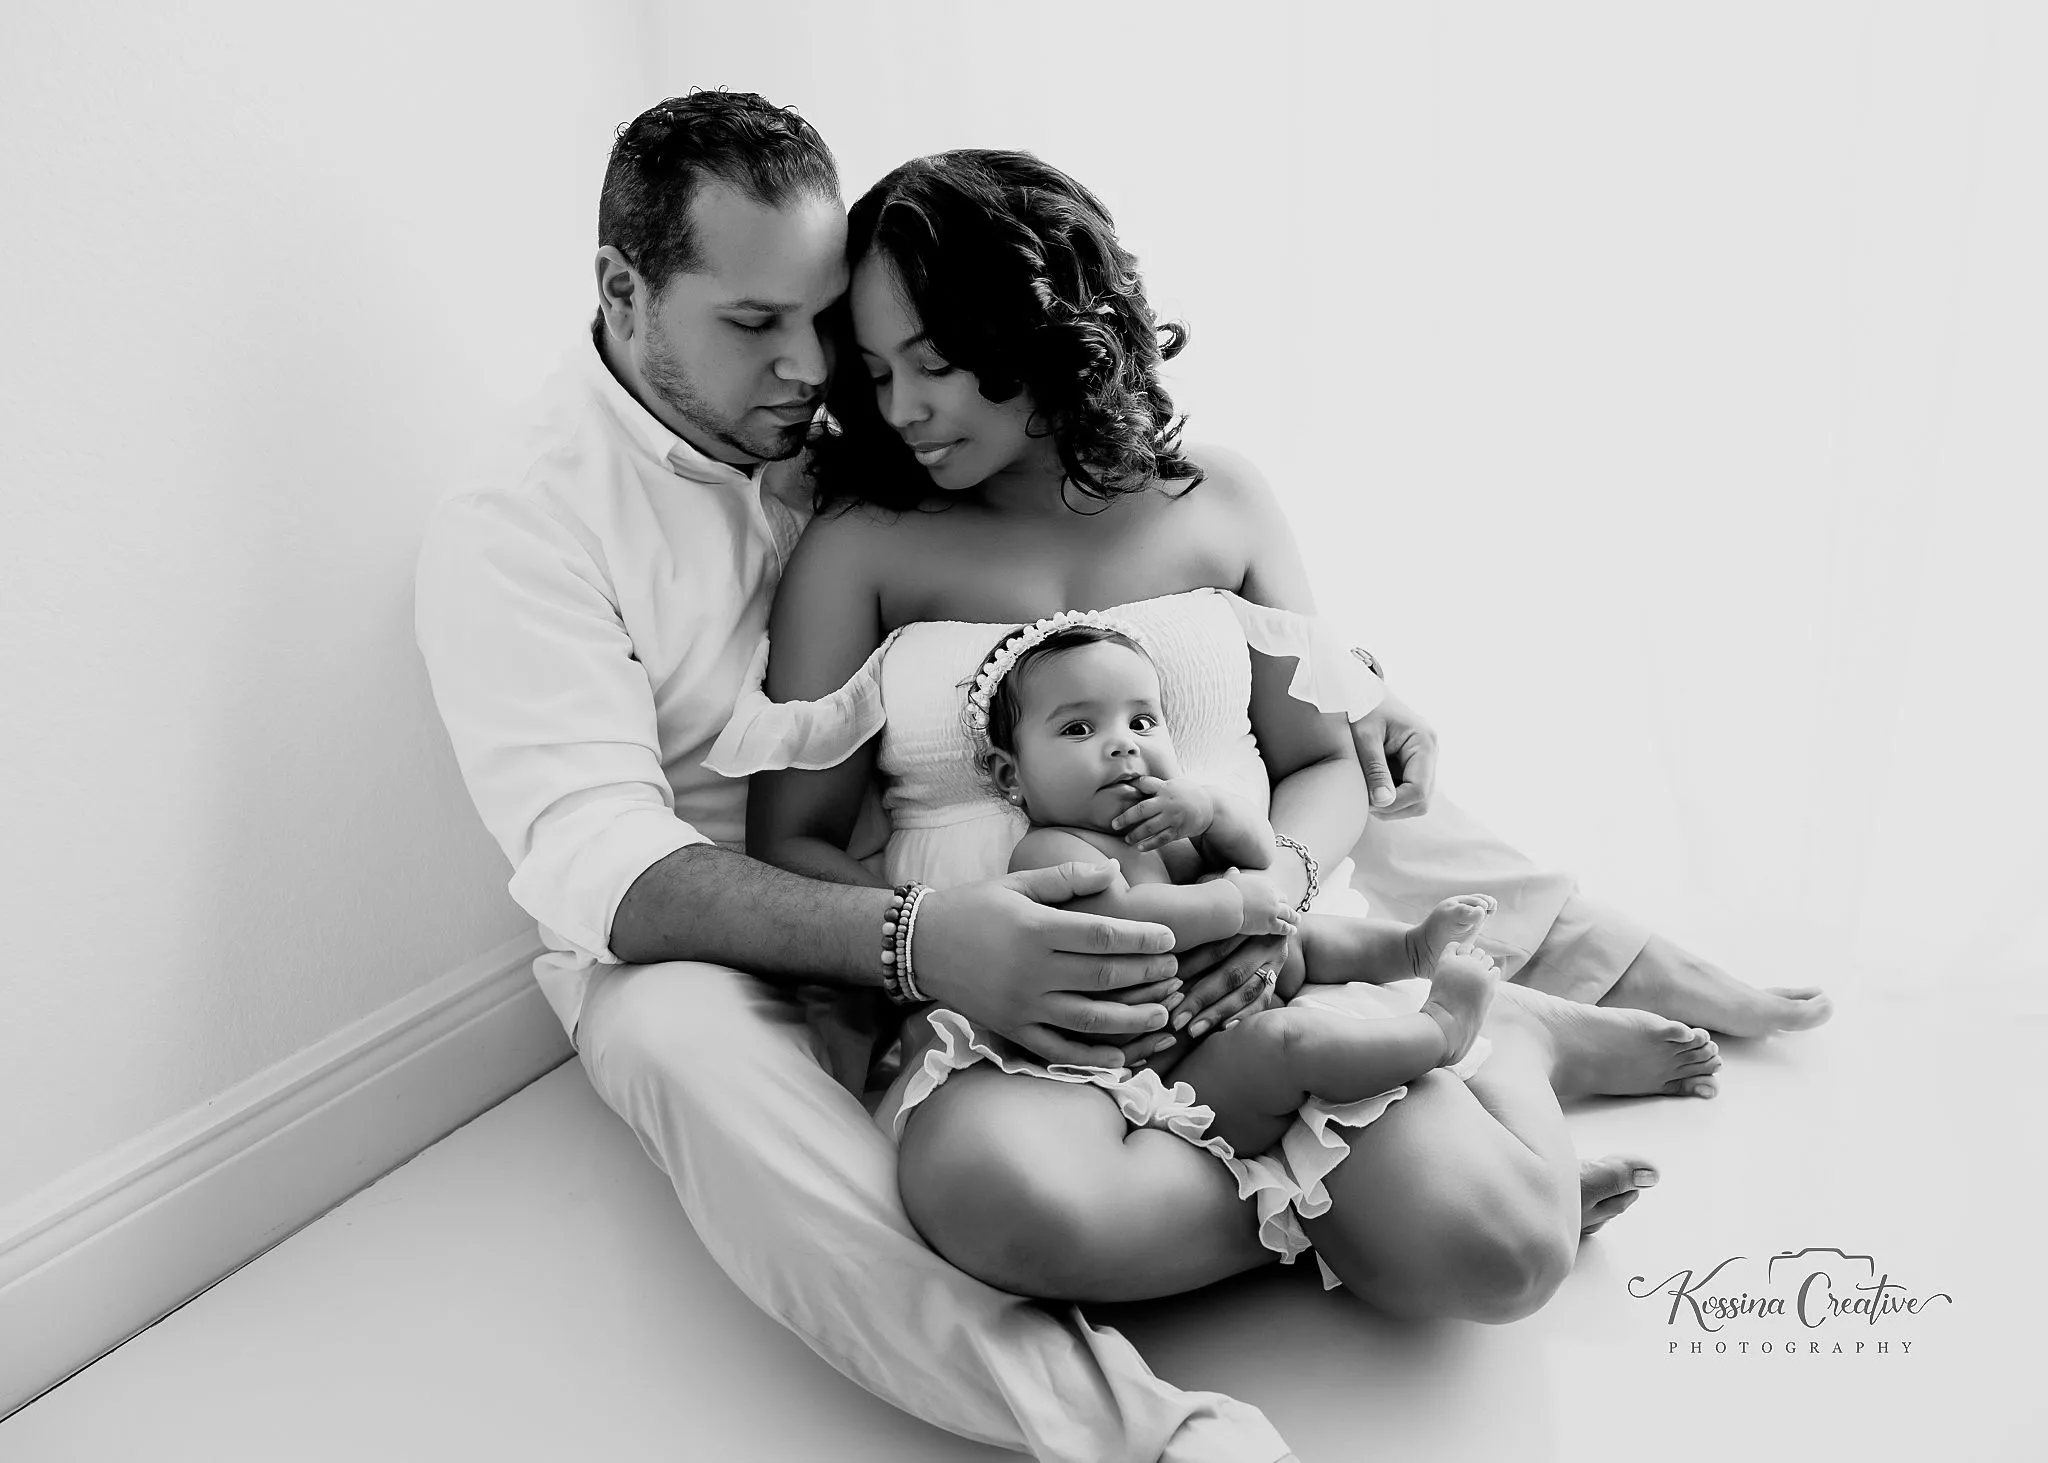 orlando photo studio family photographer studio portraits generations, black and white photo mom dad baby snuggling